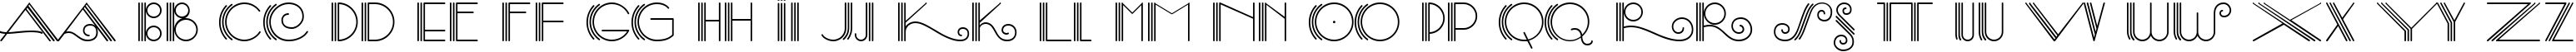 Пример написания английского алфавита шрифтом Samba DecorC